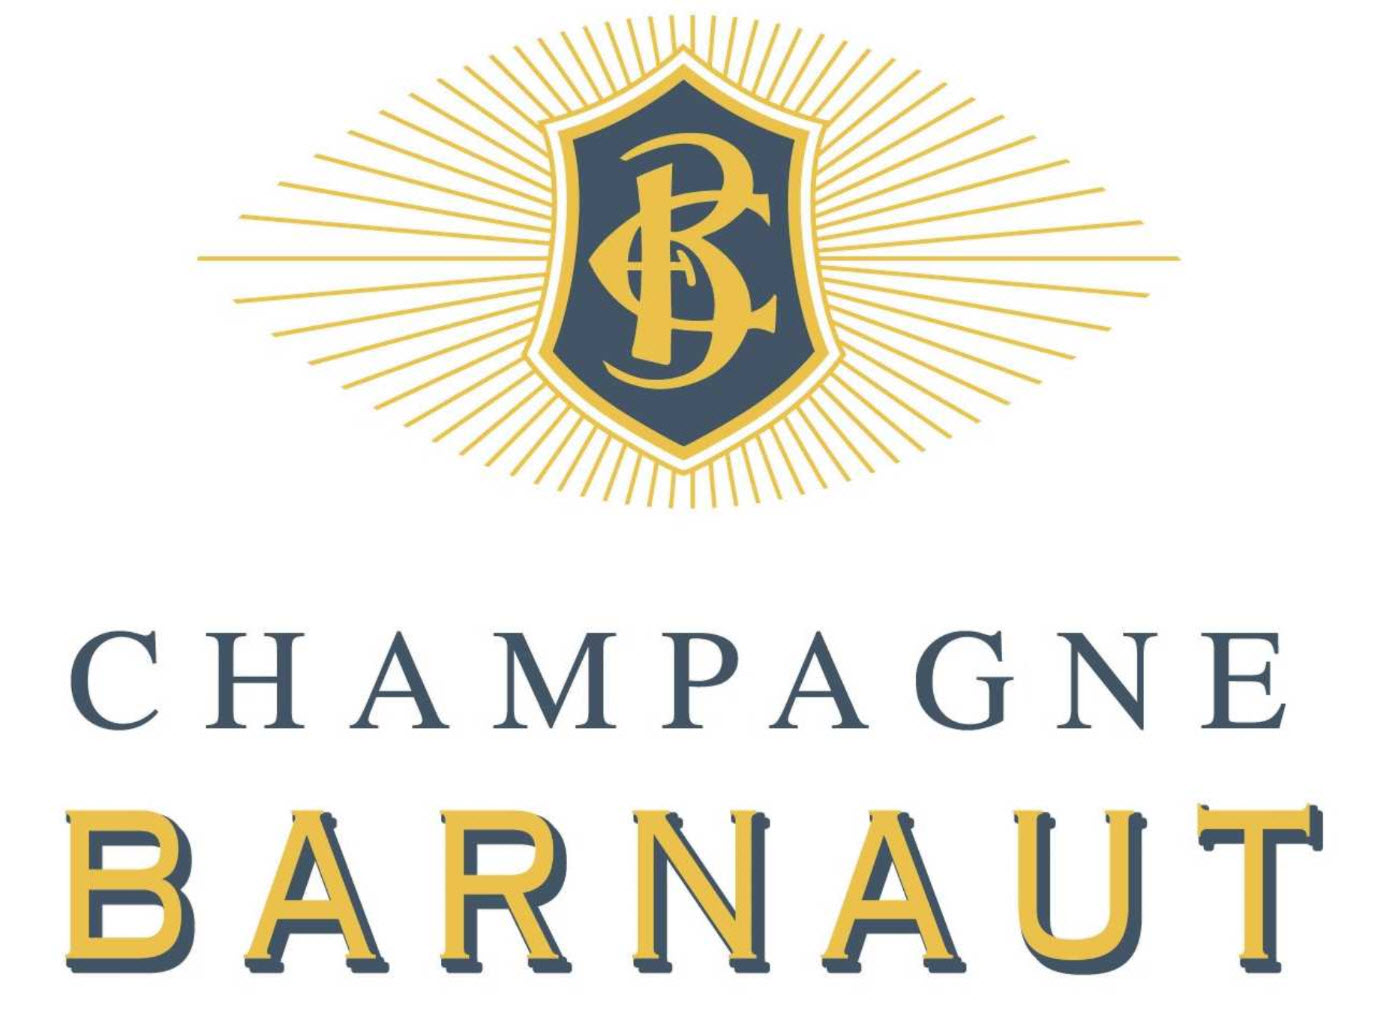 Champagne Barnaut